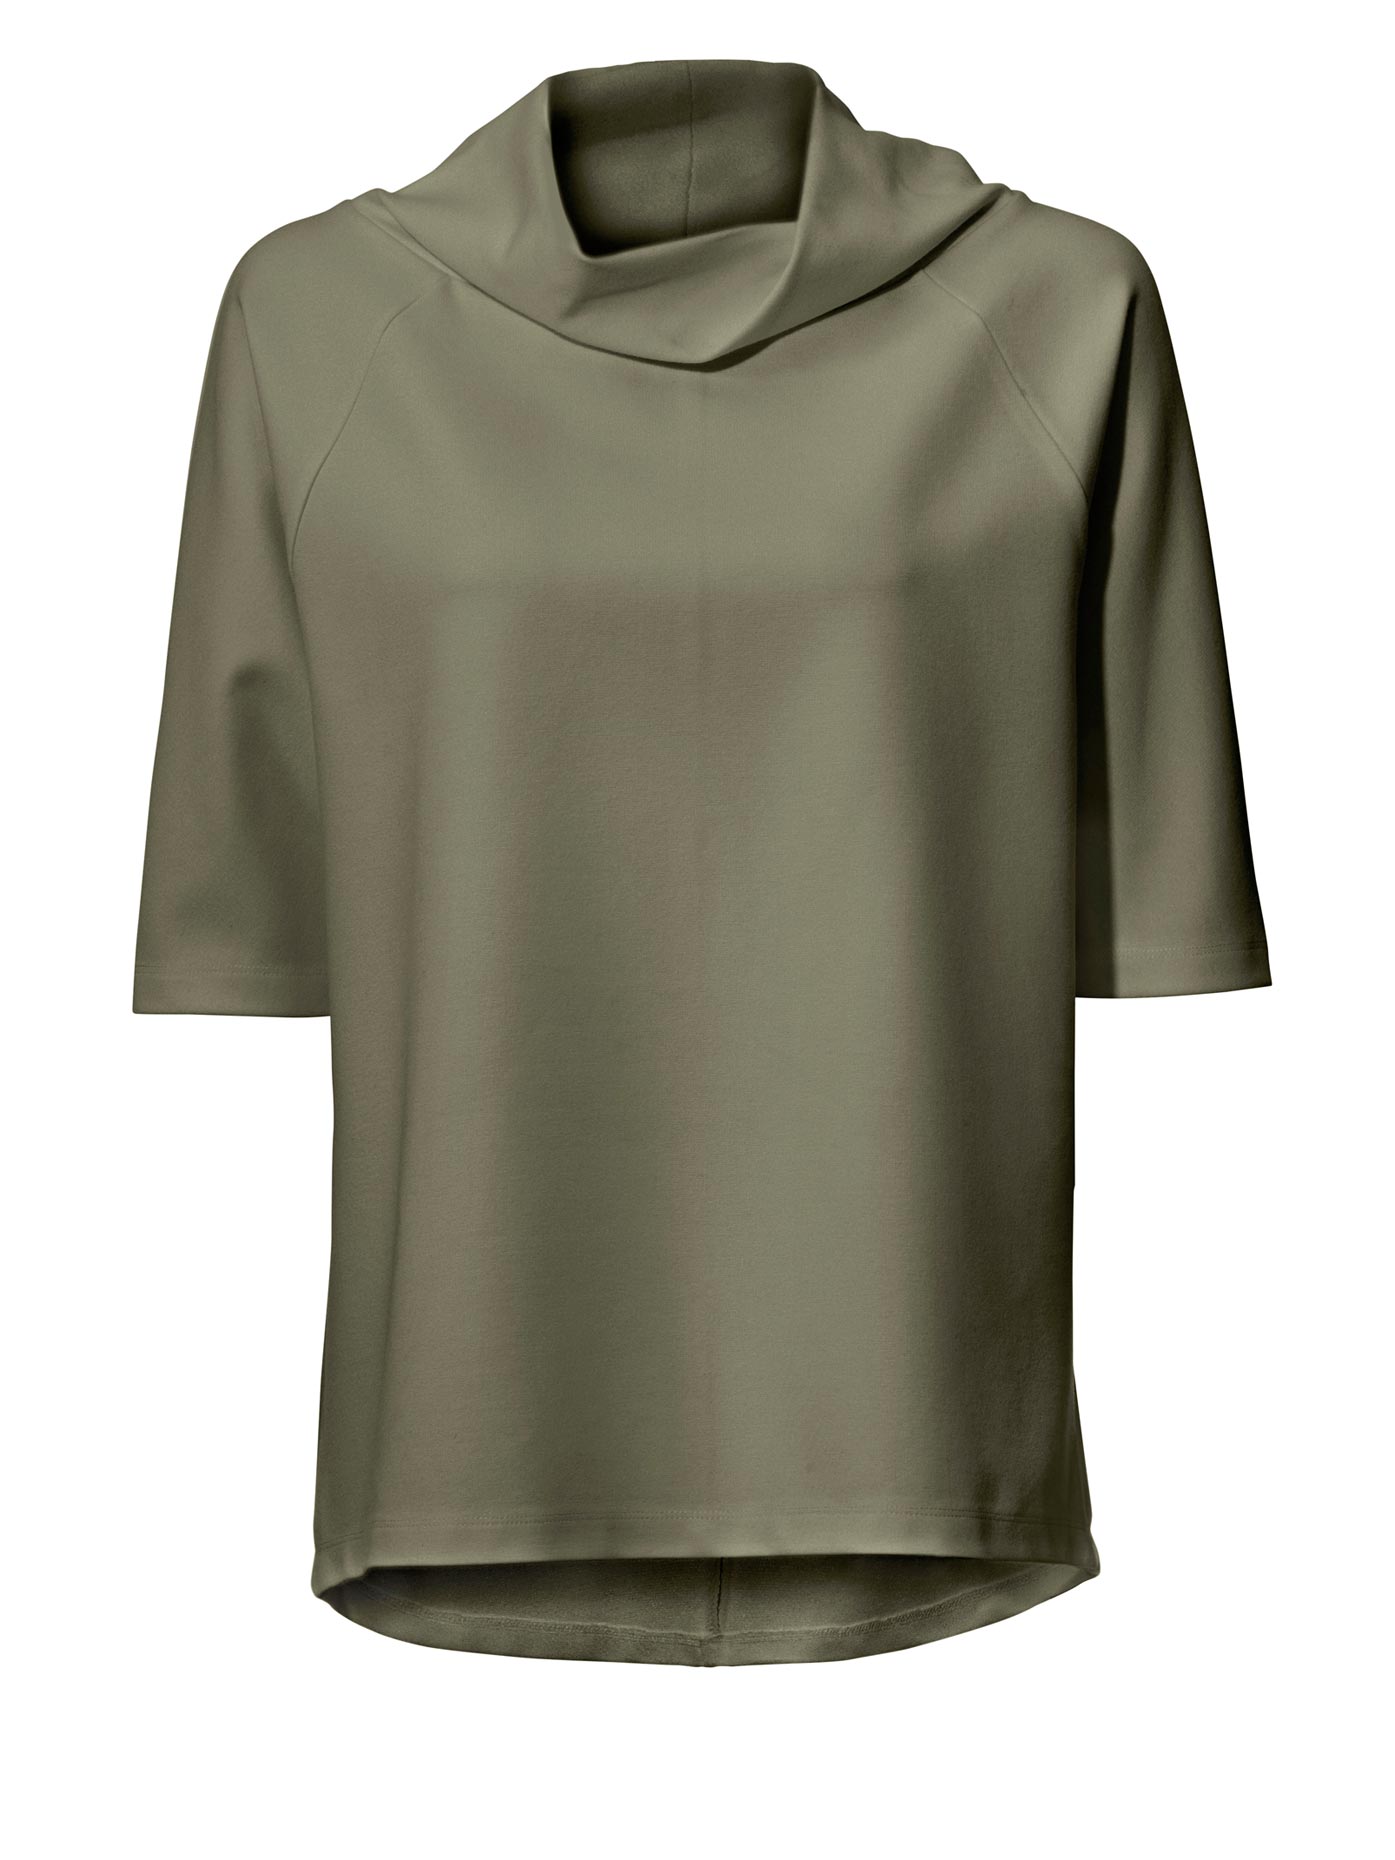 RICK CARDONA by Heine Oversize-Shirt »Oversized Shirt« grün  34 36 38 40 42 44 46 48 50